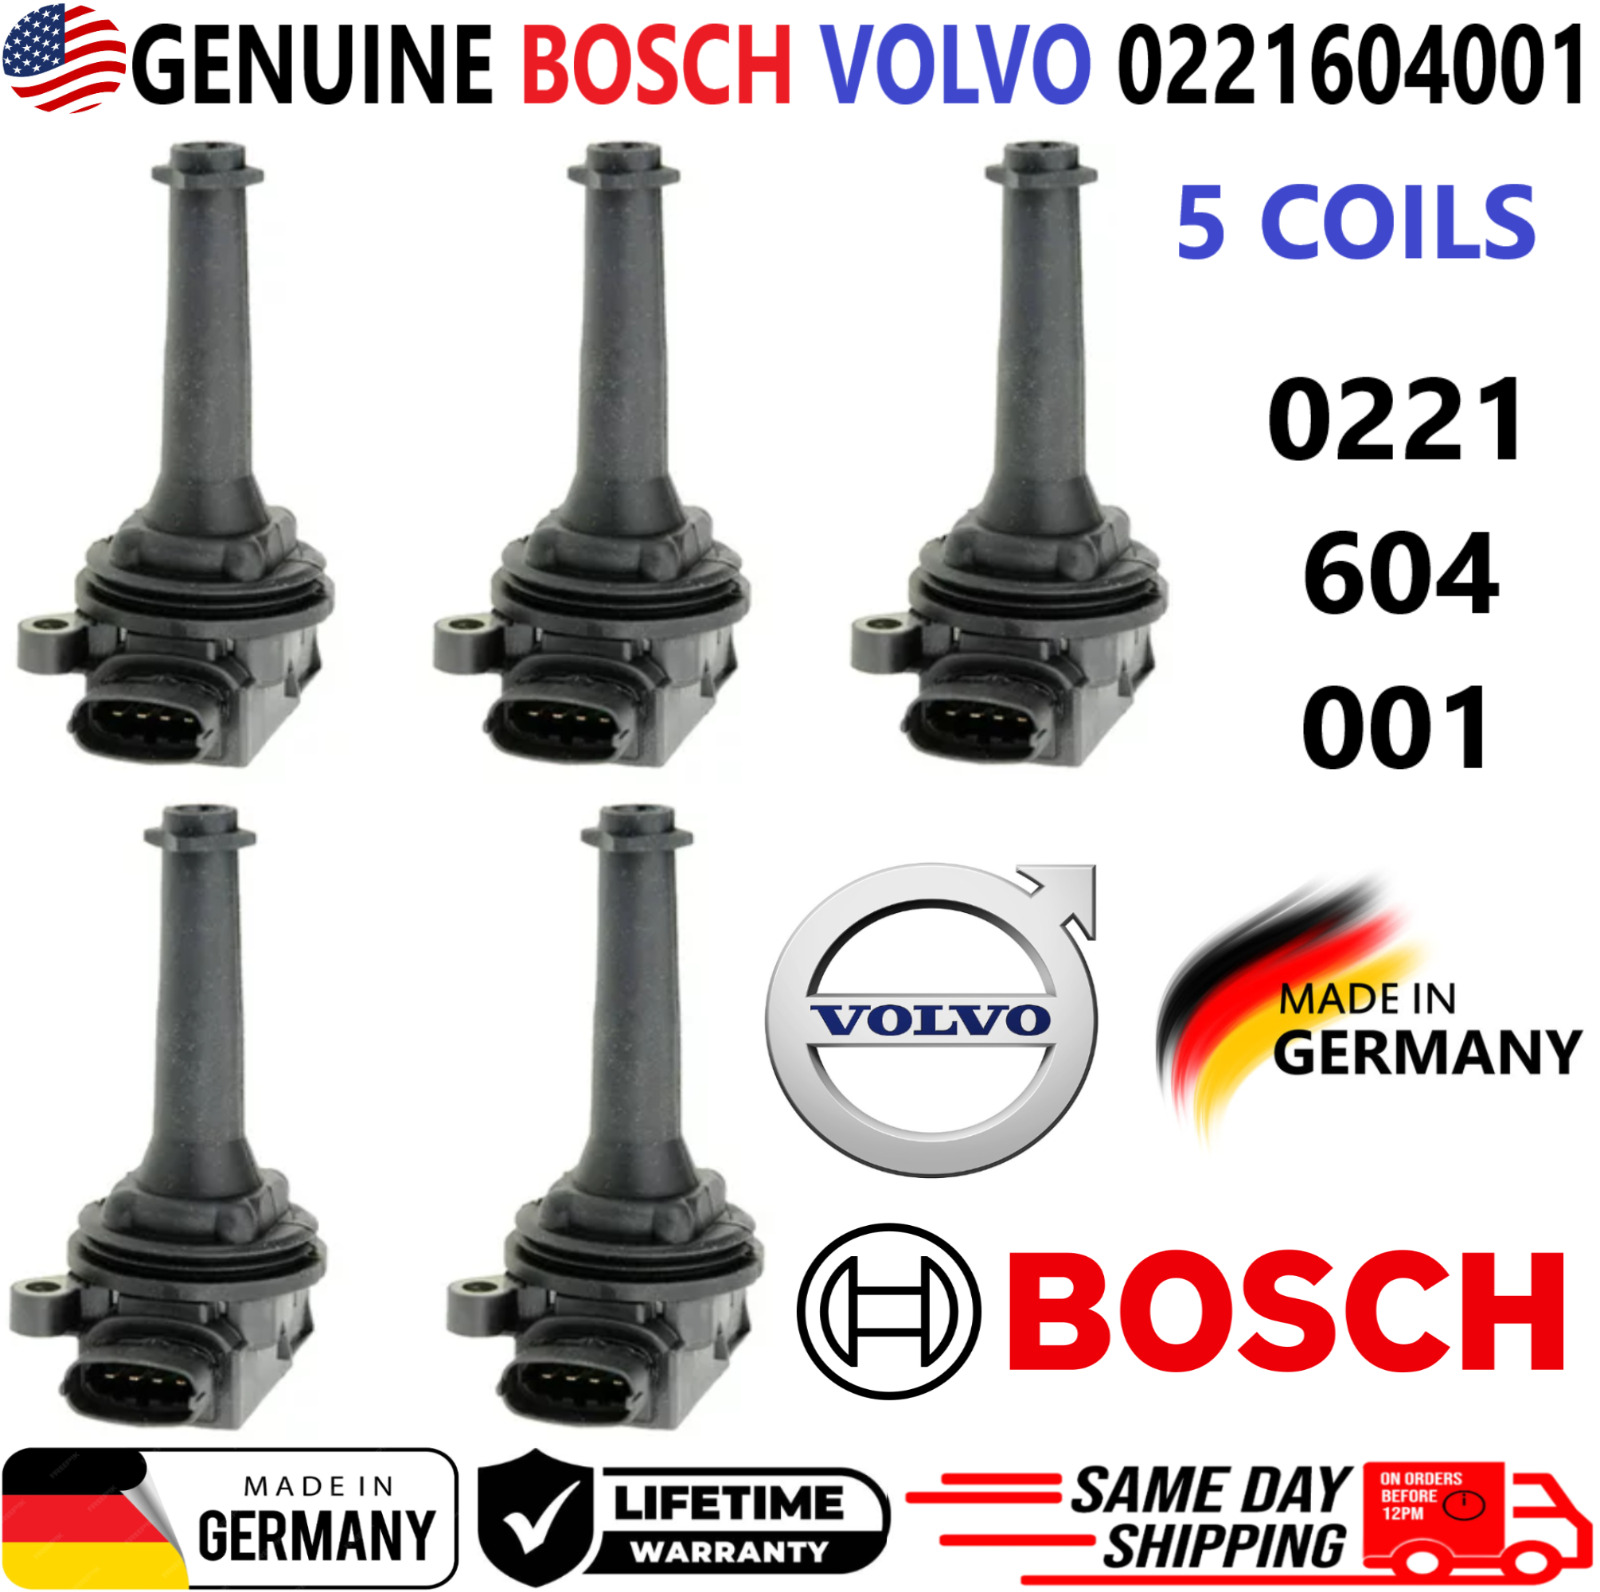 GENUINE BOSCH x5 Ignition Coils For 1999-2009 Volvo C70 S60 S70 80 V70 XC70 XC90